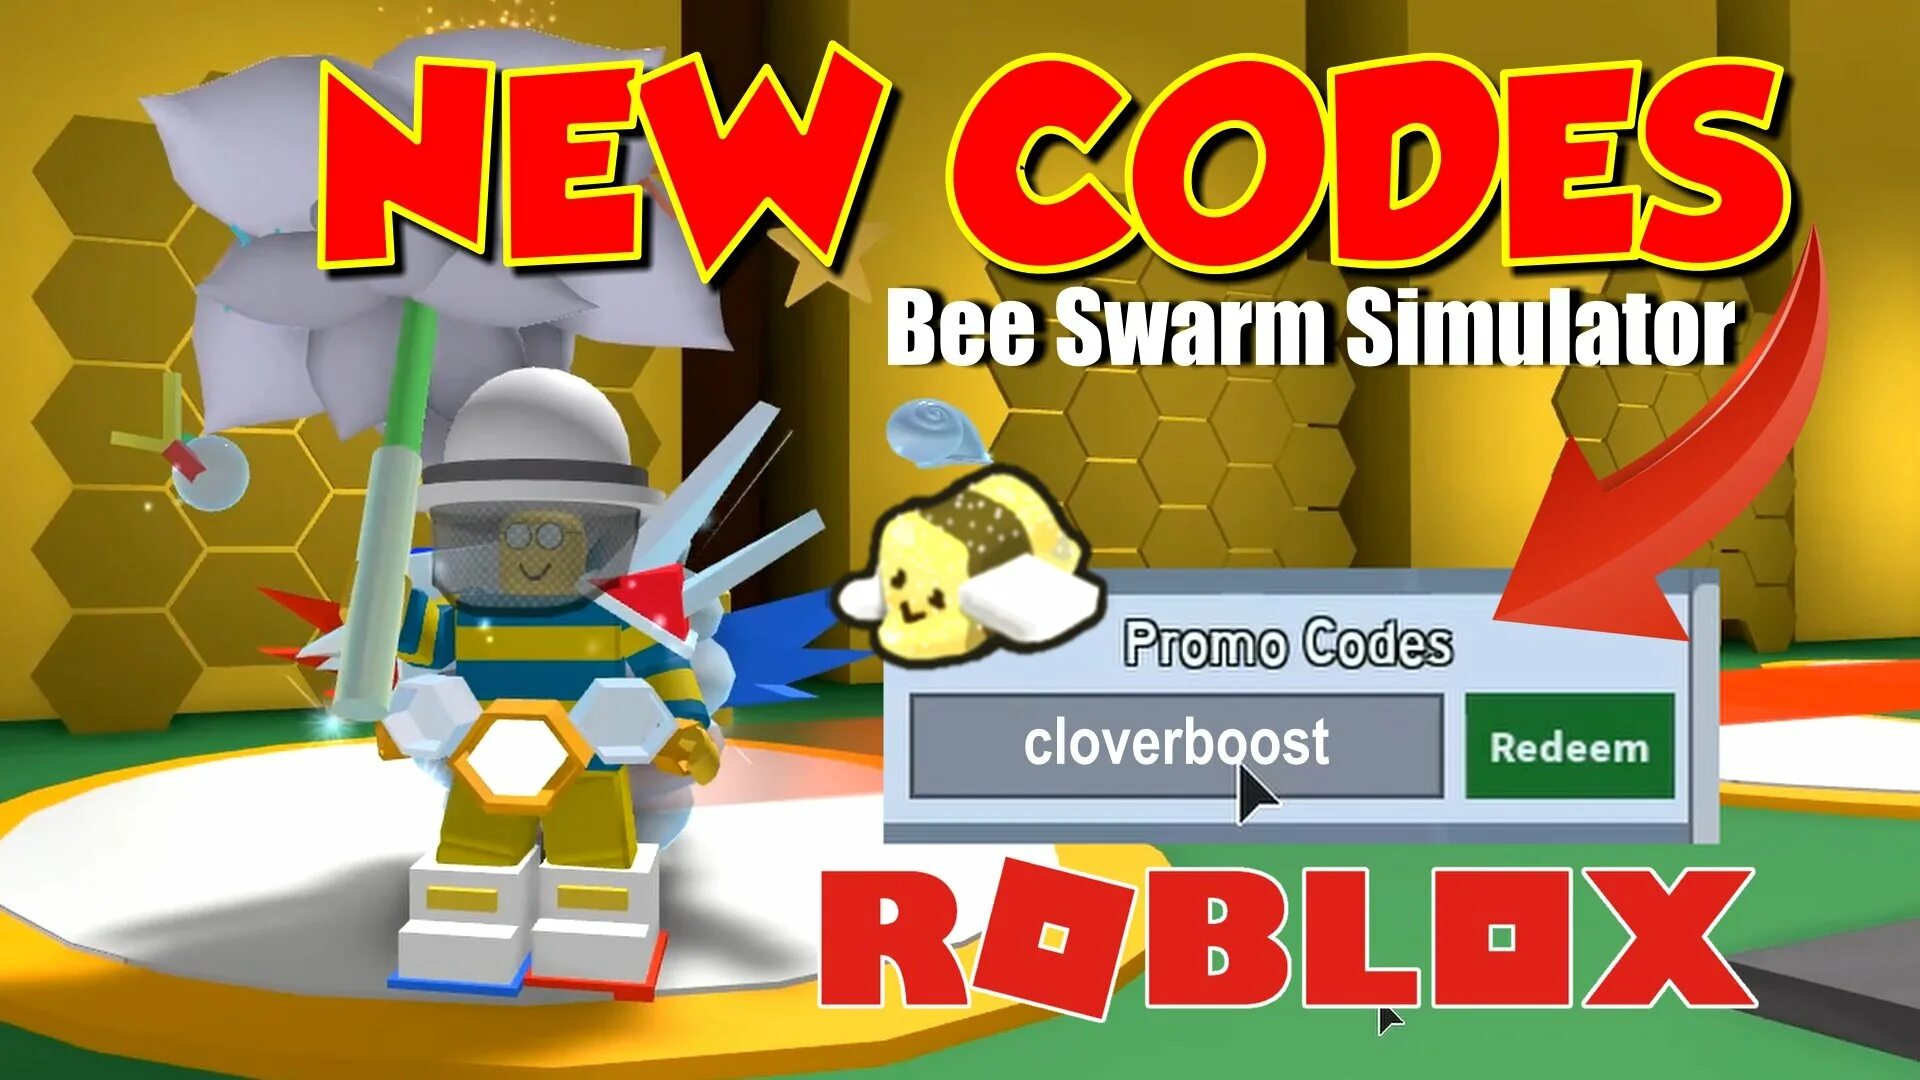 Bee Swarm Simulator codes. РОБЛОКС Bee Swarm Simulator. РОБЛОКС промокоды Bee Swarm Simulator. Roblox Bee Swarm Simulator codes. New coding simulator